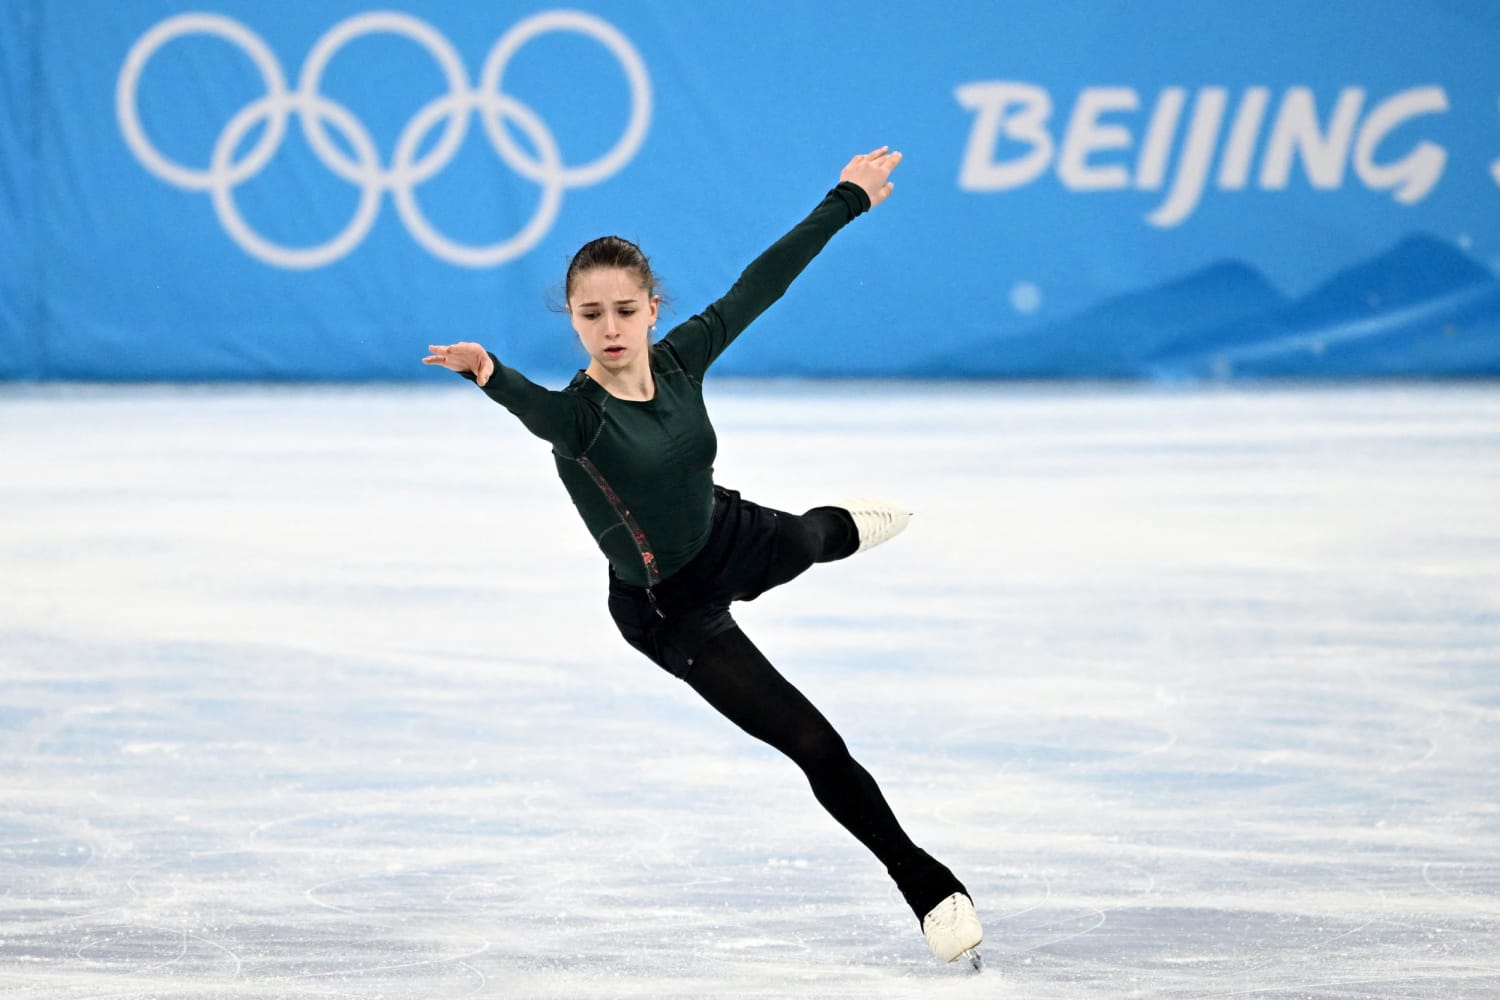 Figure skating minimum age raised to 17 in historic decision ahead of 2026 Olympics